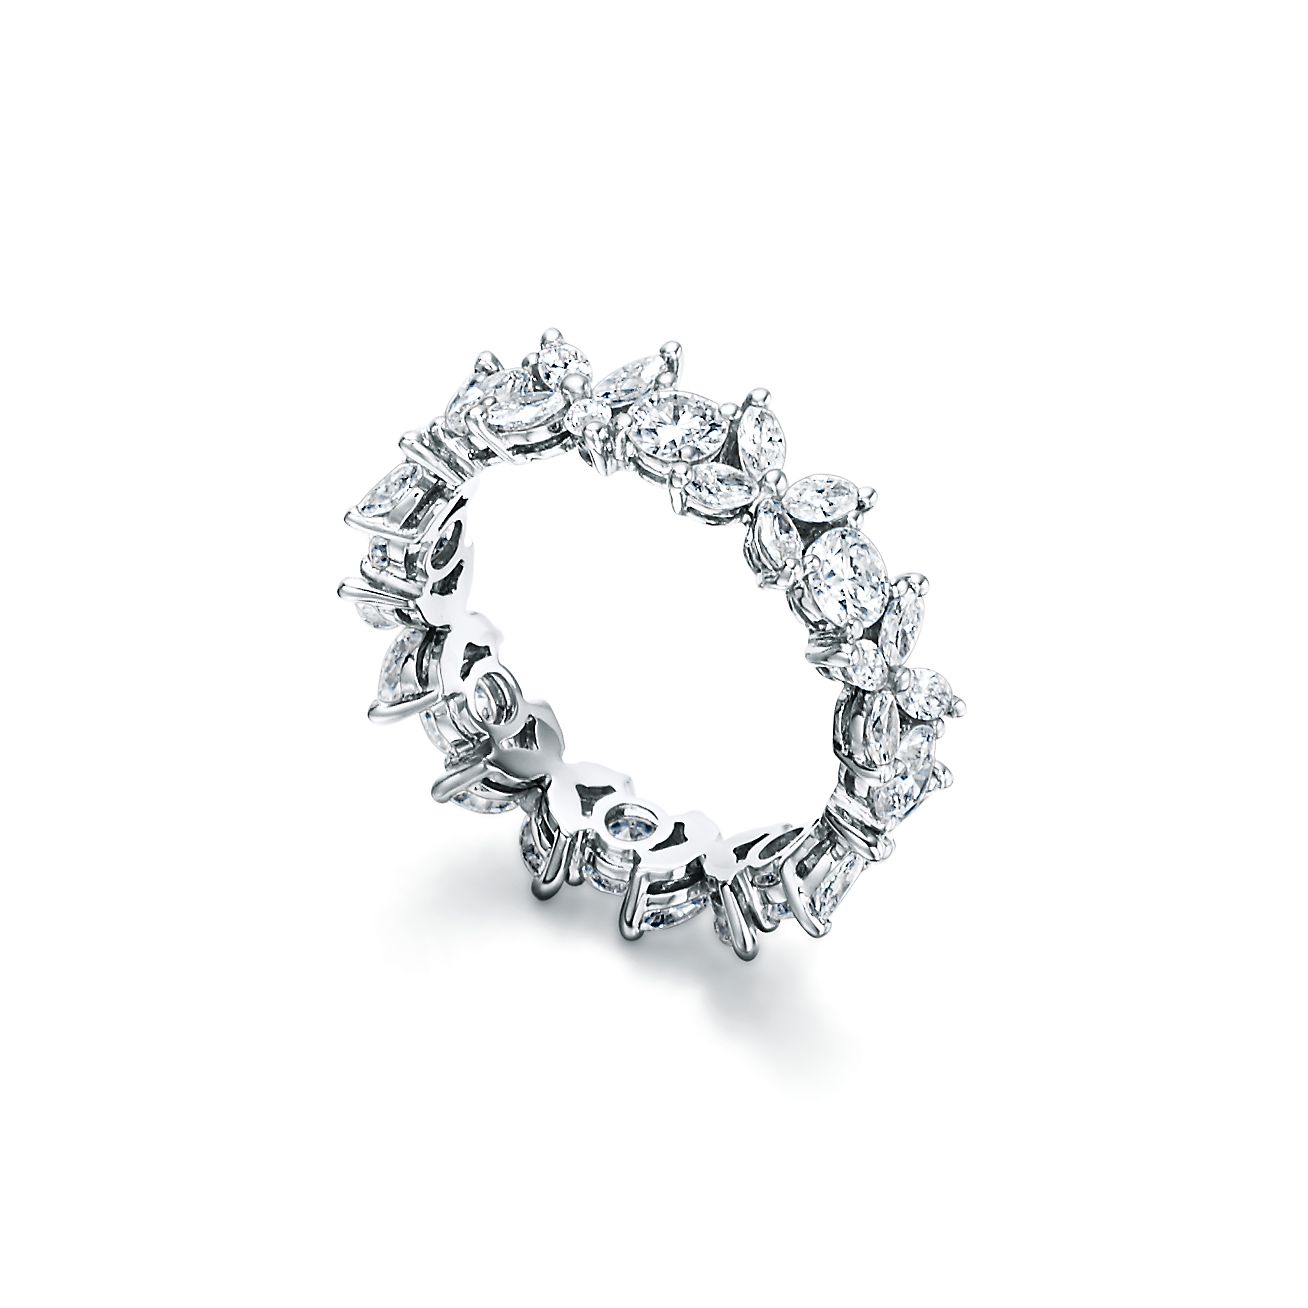 Tiffany Victoria™ alternating ring in 